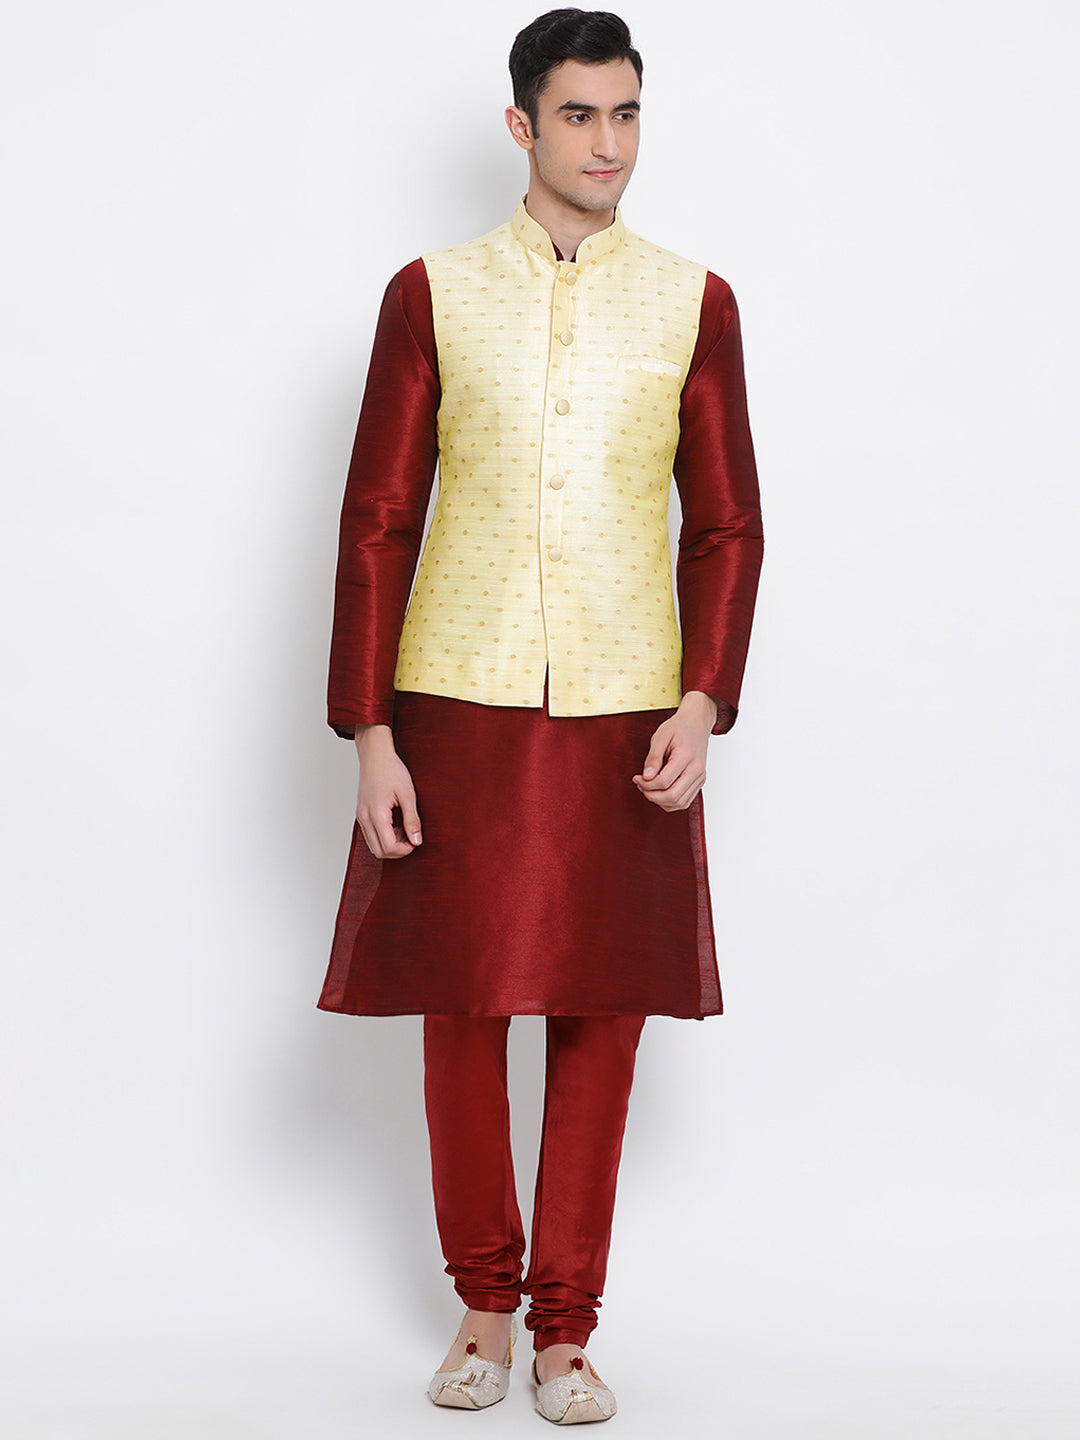 Pink Chikankari Embroidered Sequins Work Jacket With Off White Silk Kurta  Payjama-handcrafted at Rs 6999.00 | Yamuna Nagar| ID: 2851298075562